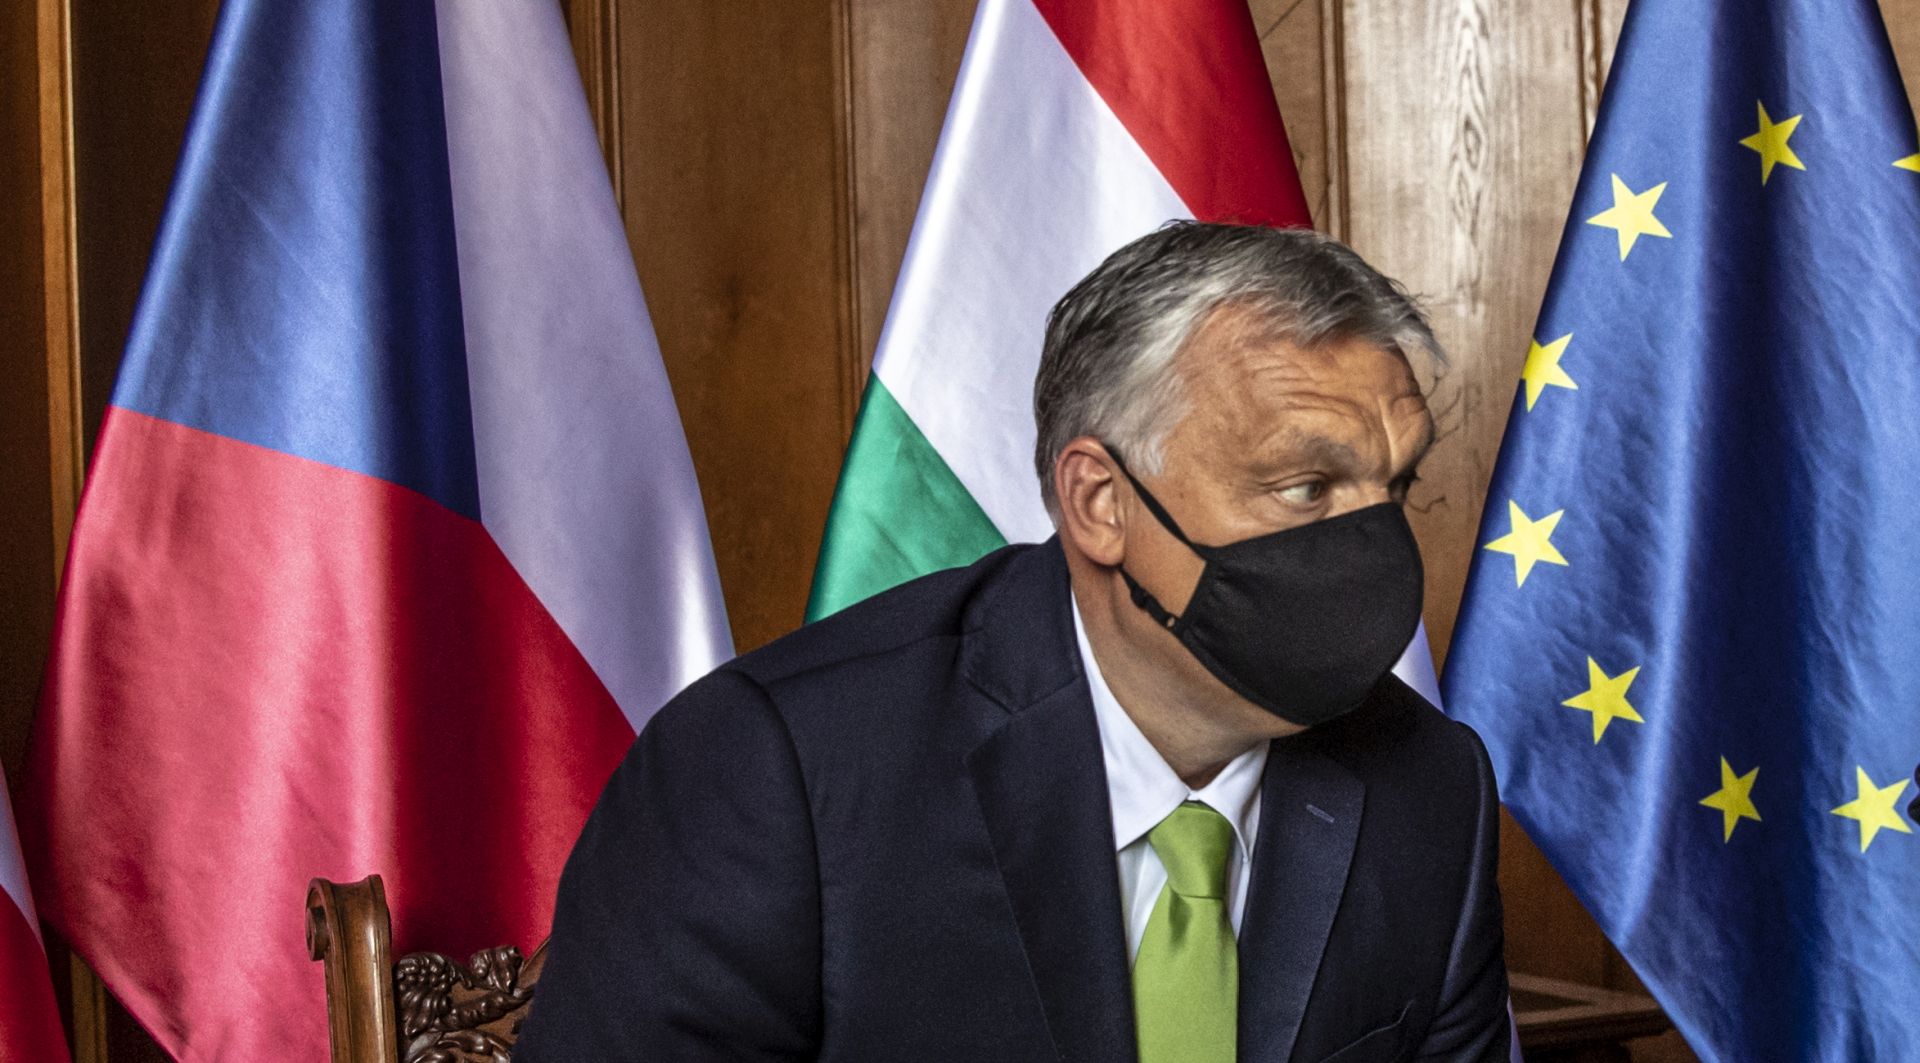 epa08478707 Hungarian Prime Minister Viktor Orban wearing protective face mask during the Visegrad Group (V4) summit at Lednice Chateau in Lednice, Czech Republic, 11 June 2020.  EPA/MARTIN DIVISEK